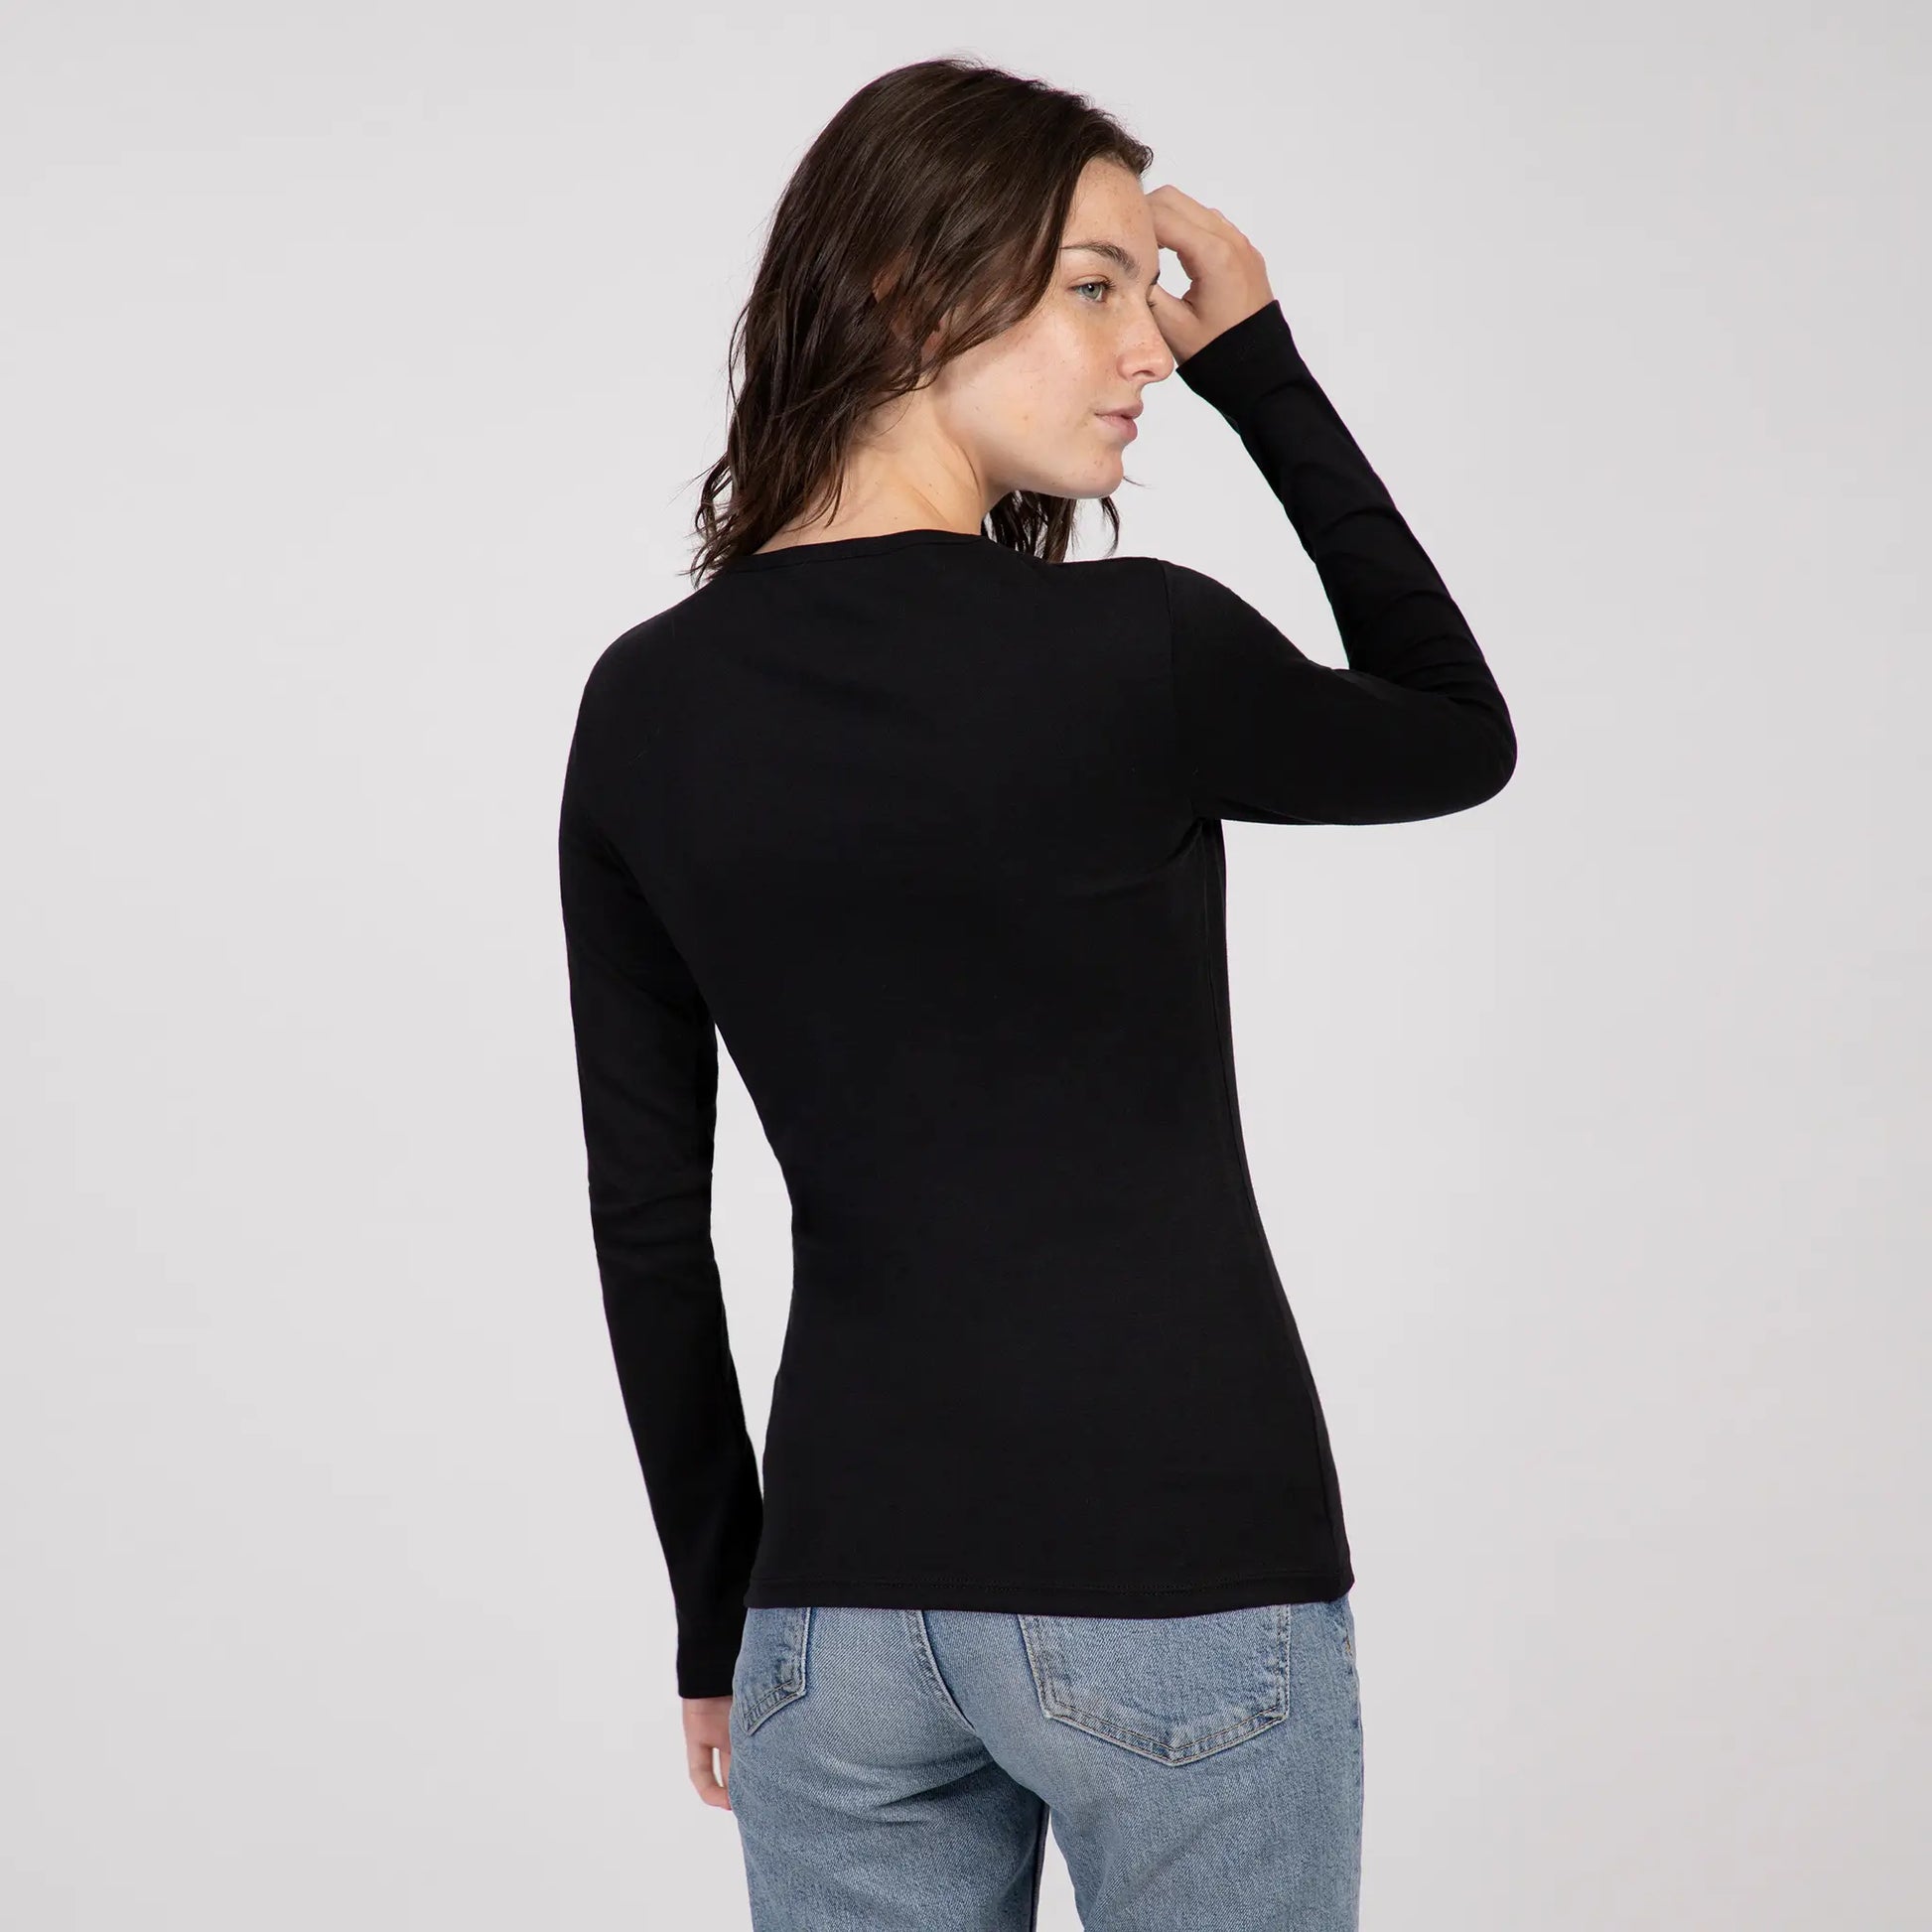 womens indoor tshirt long sleeve color black